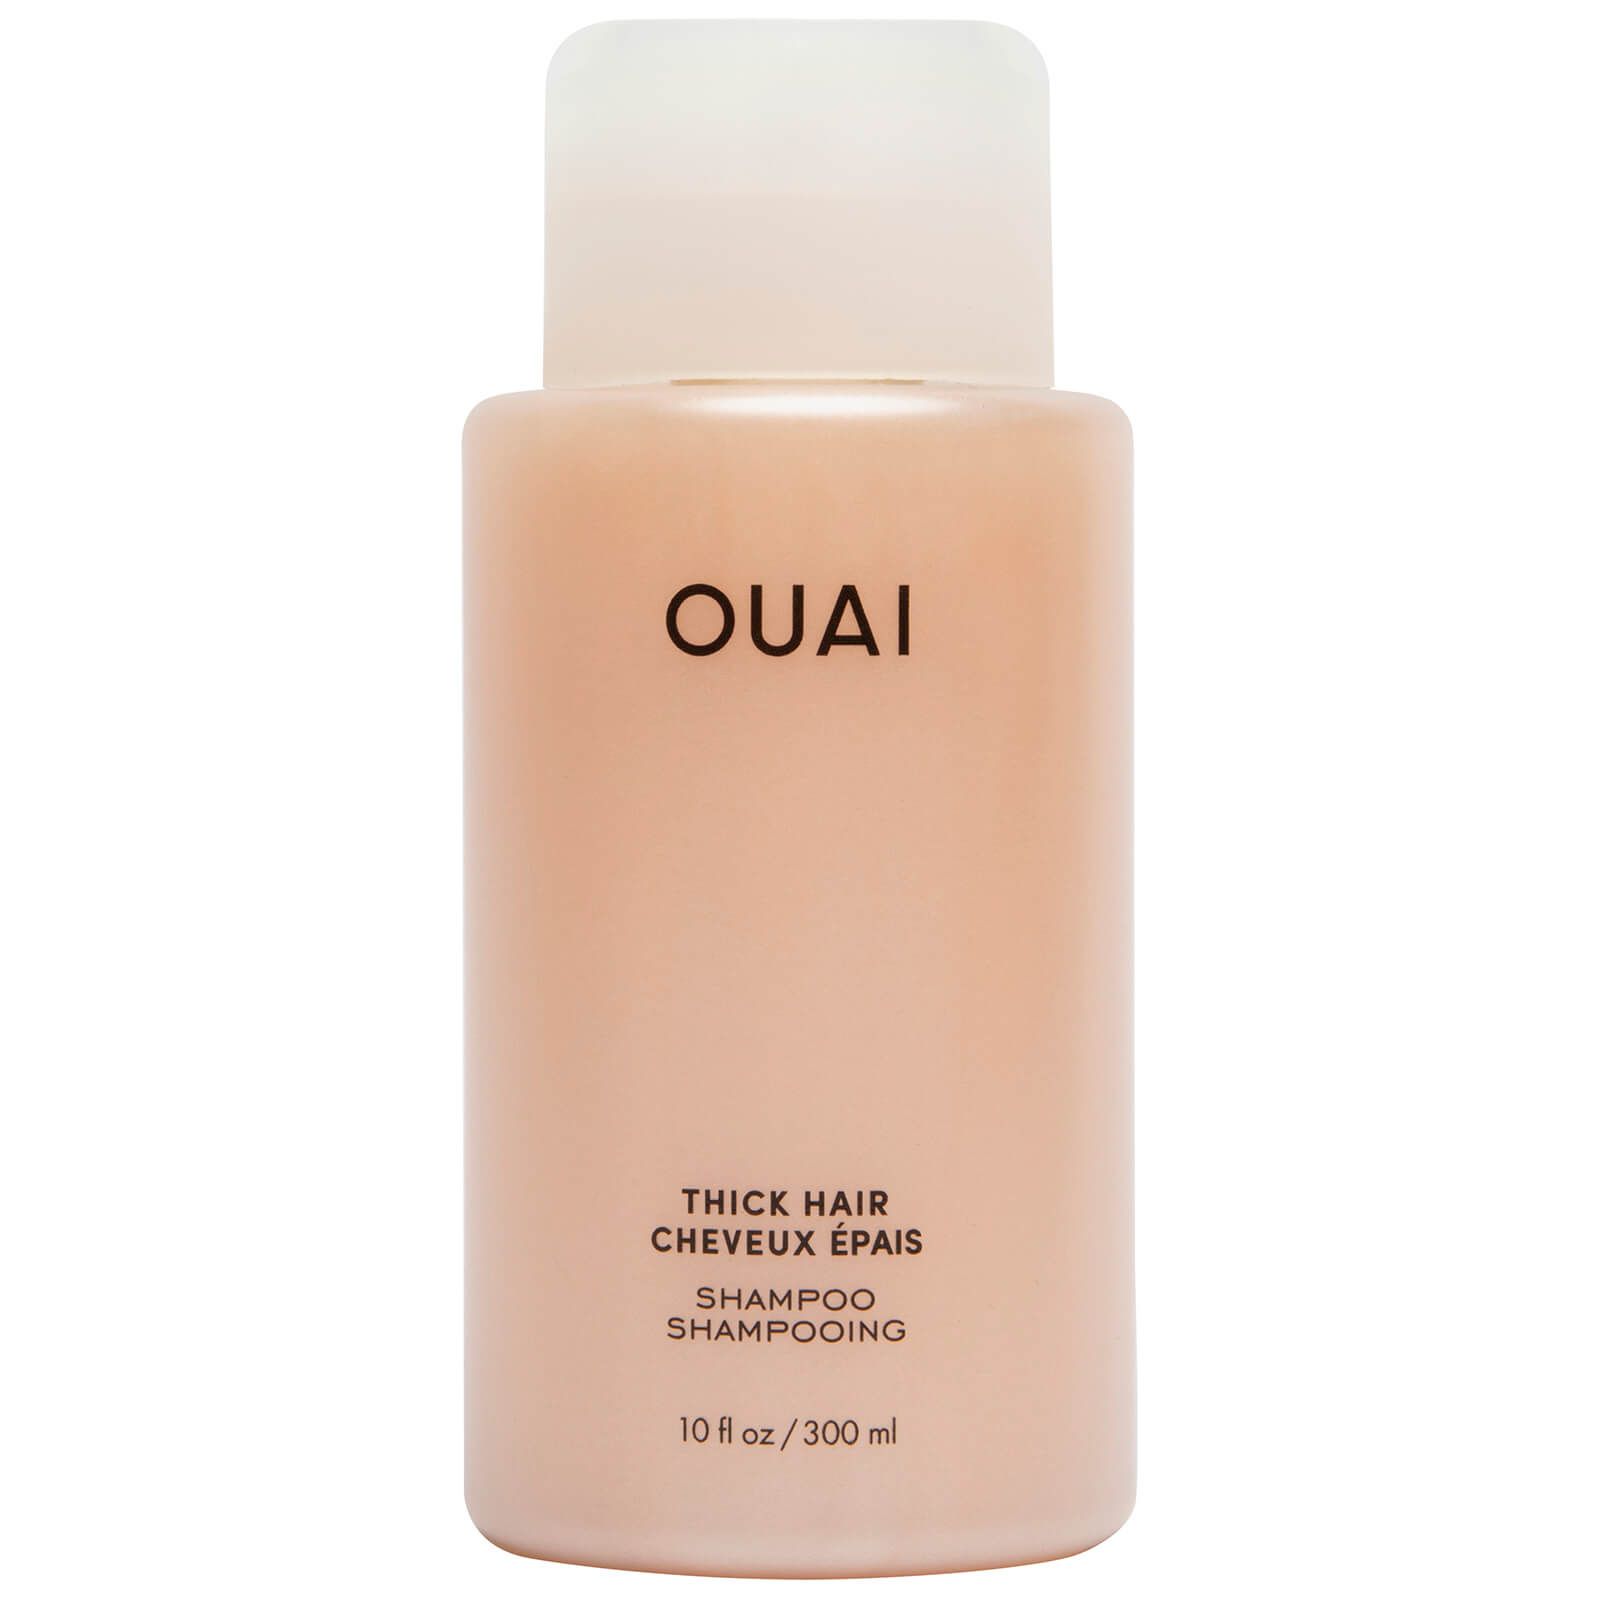 OUAI Thick Hair Shampoo 300ml | Cult Beauty (Global)